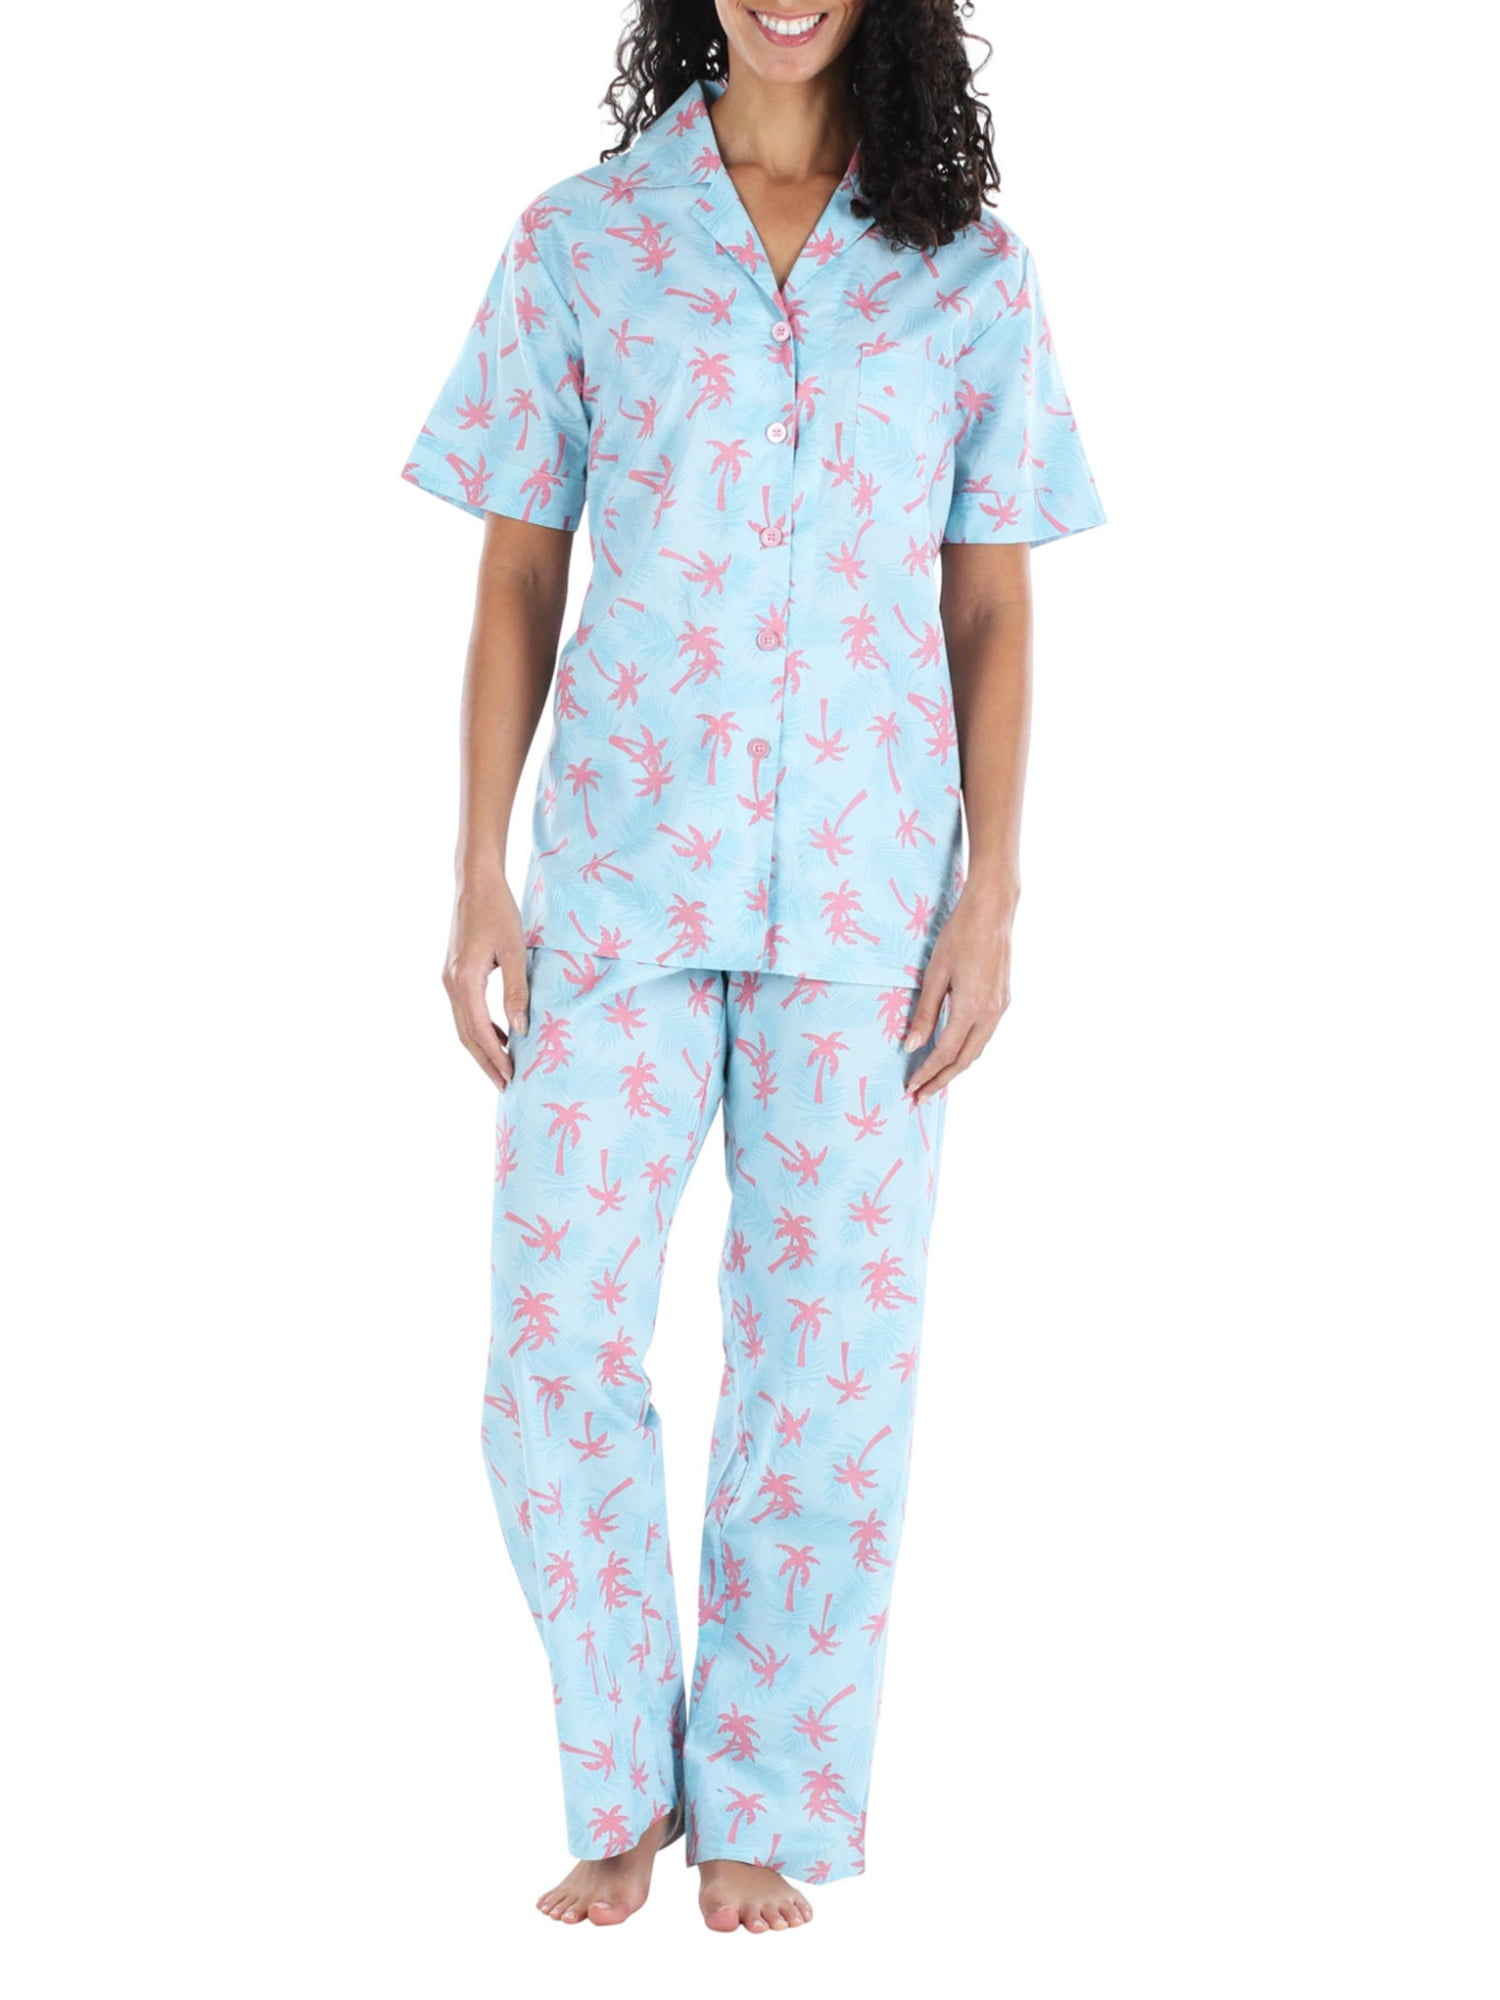 Capris M 8-10 Womens Pajamas Set TEAL w/ PURPLE WHITE FLOWERS Button Up S/S Top